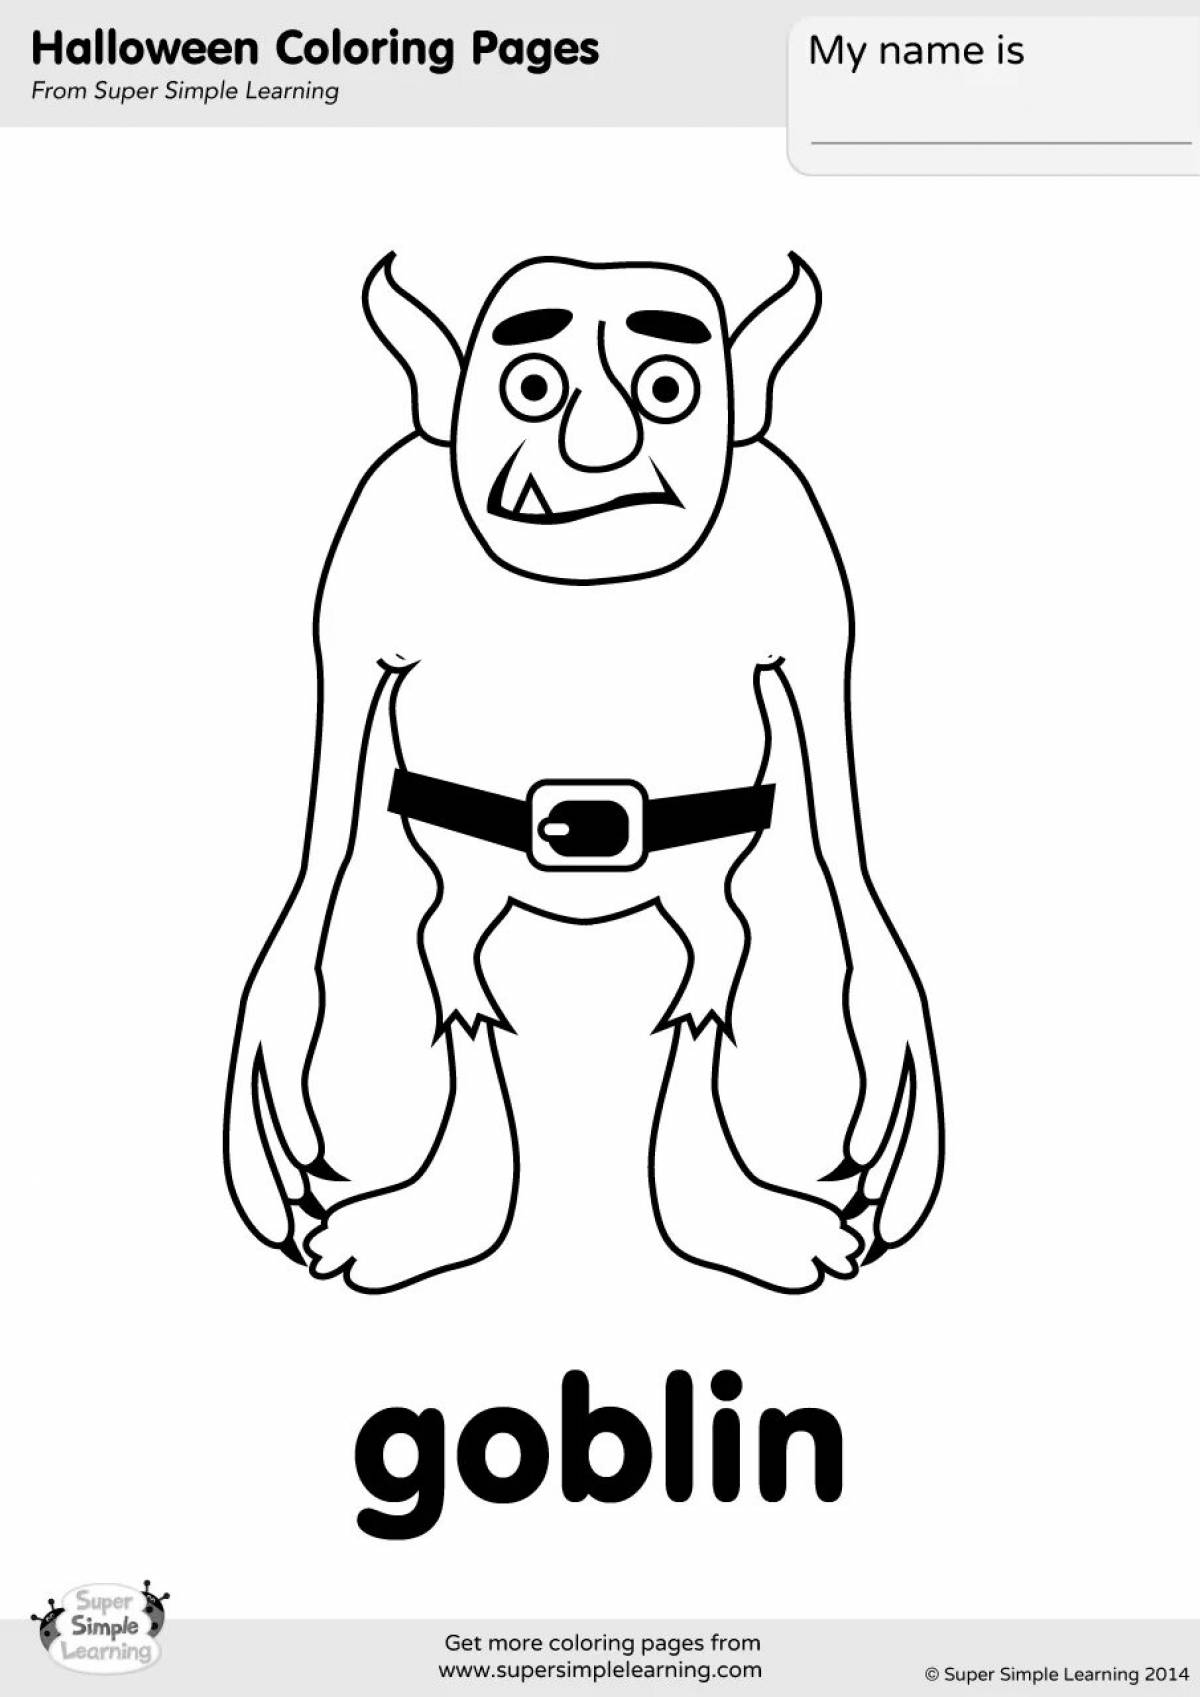 Coloring goblin tender core